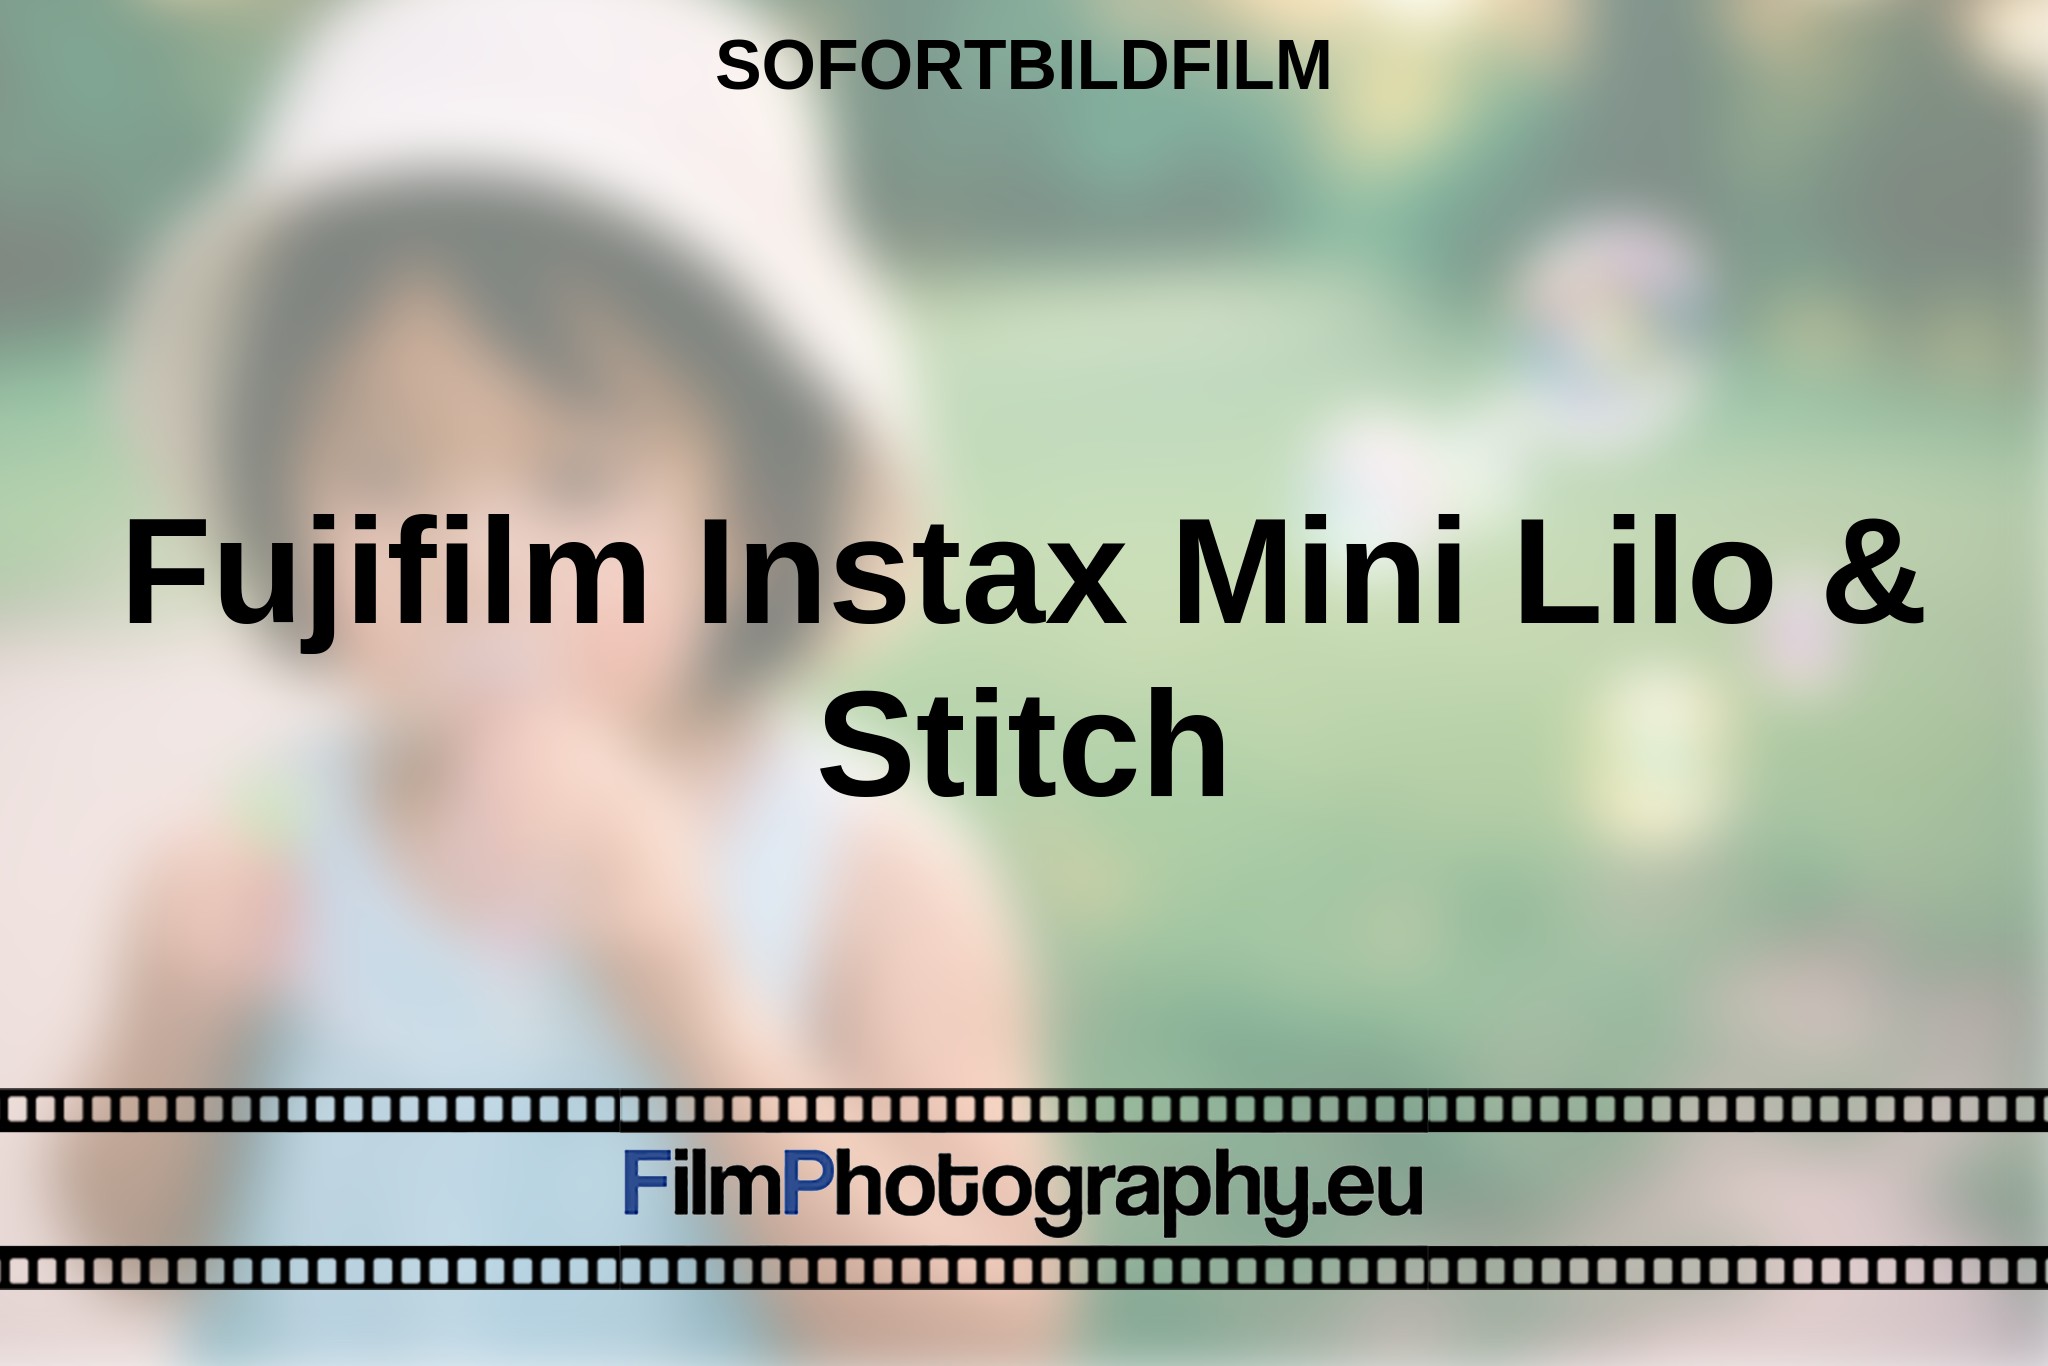 fujifilm-instax-mini-lilo-stitch-sofortbildfilm-bnv.jpg